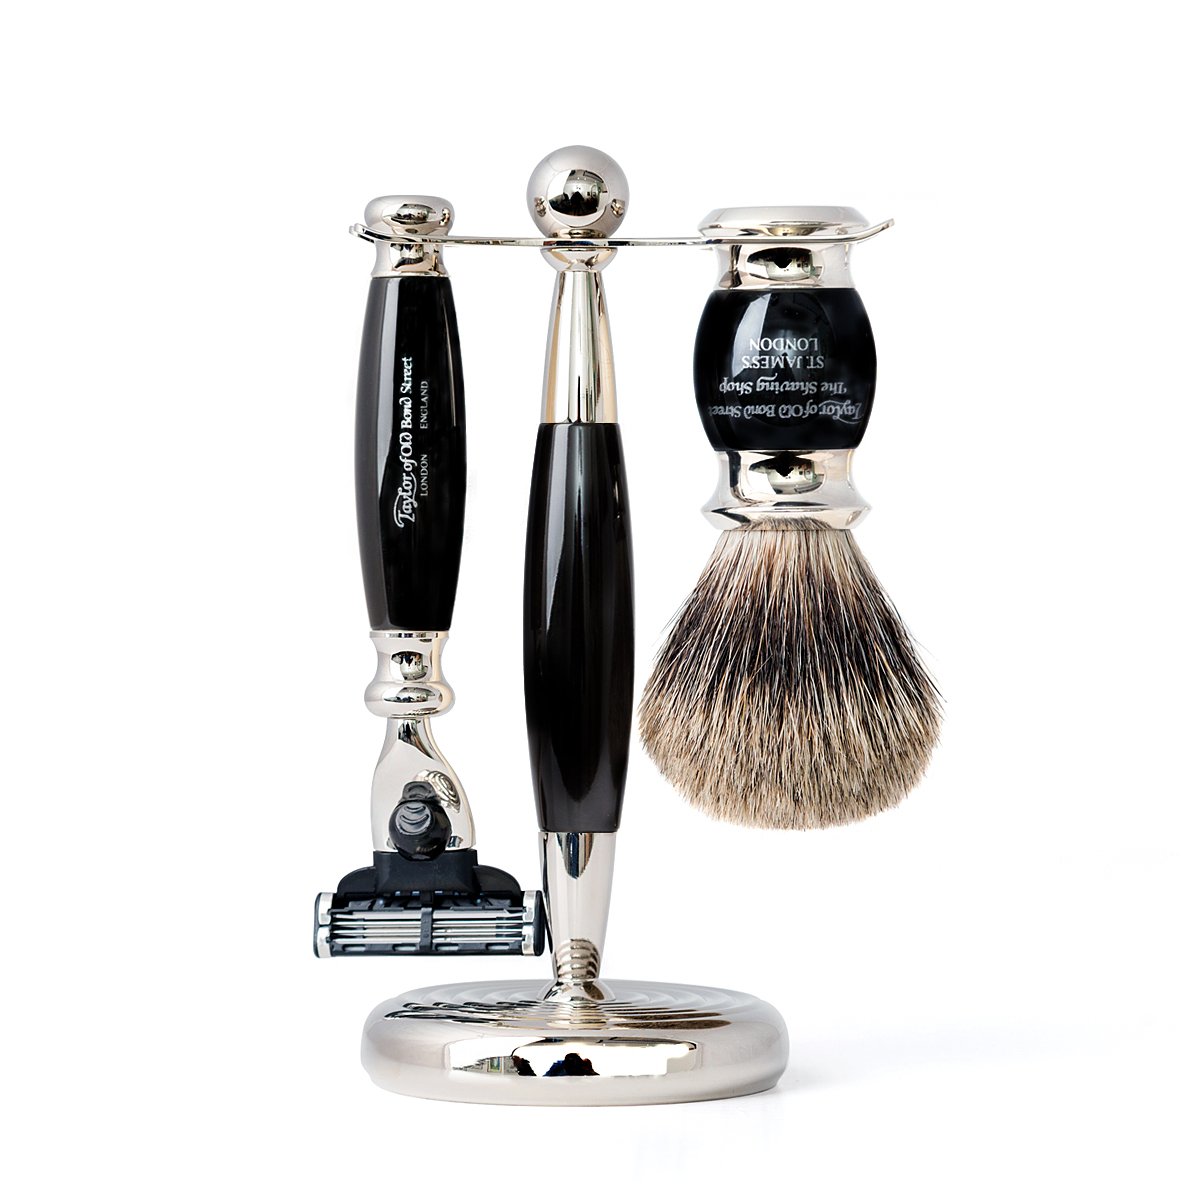 Black Pure Mach3 Edwardian Shaving Set